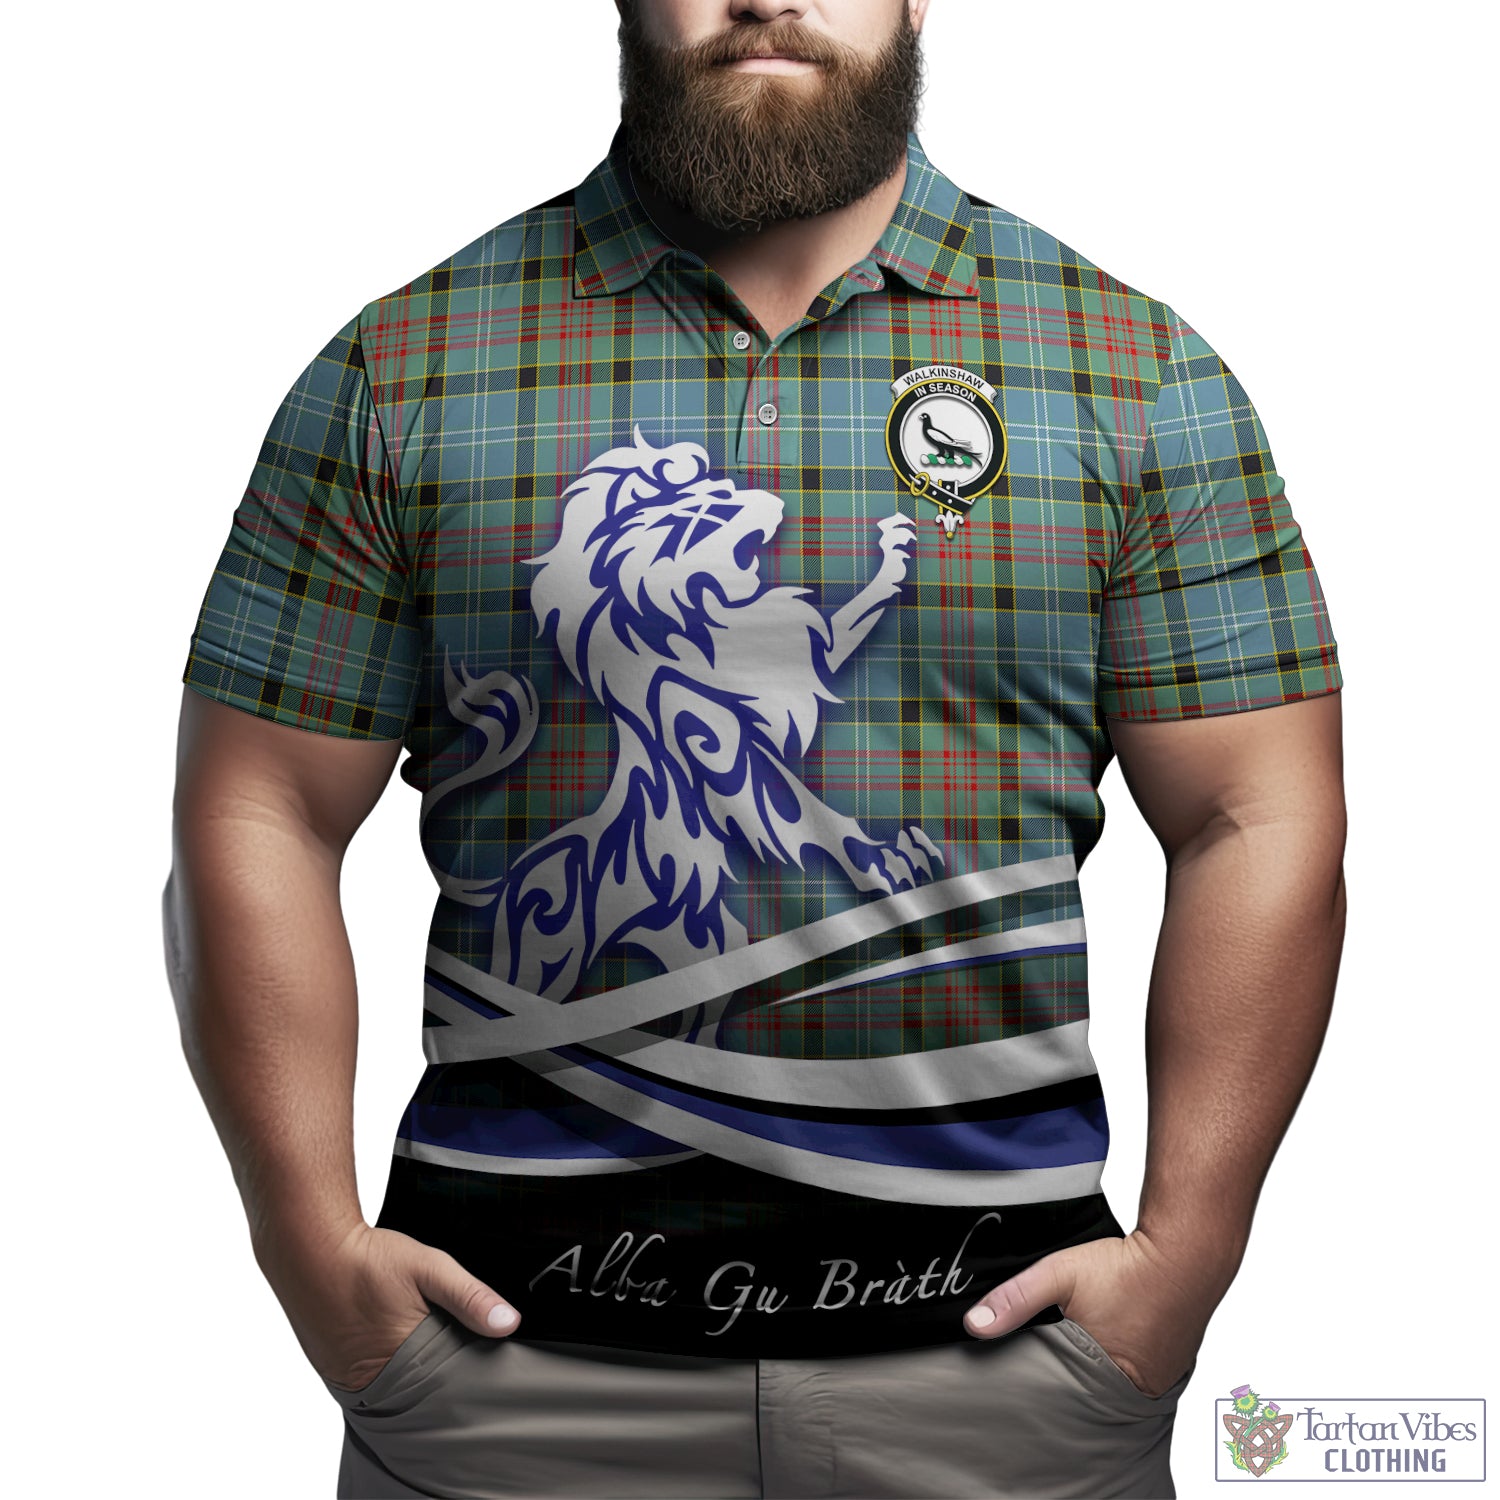 walkinshaw-tartan-polo-shirt-with-alba-gu-brath-regal-lion-emblem